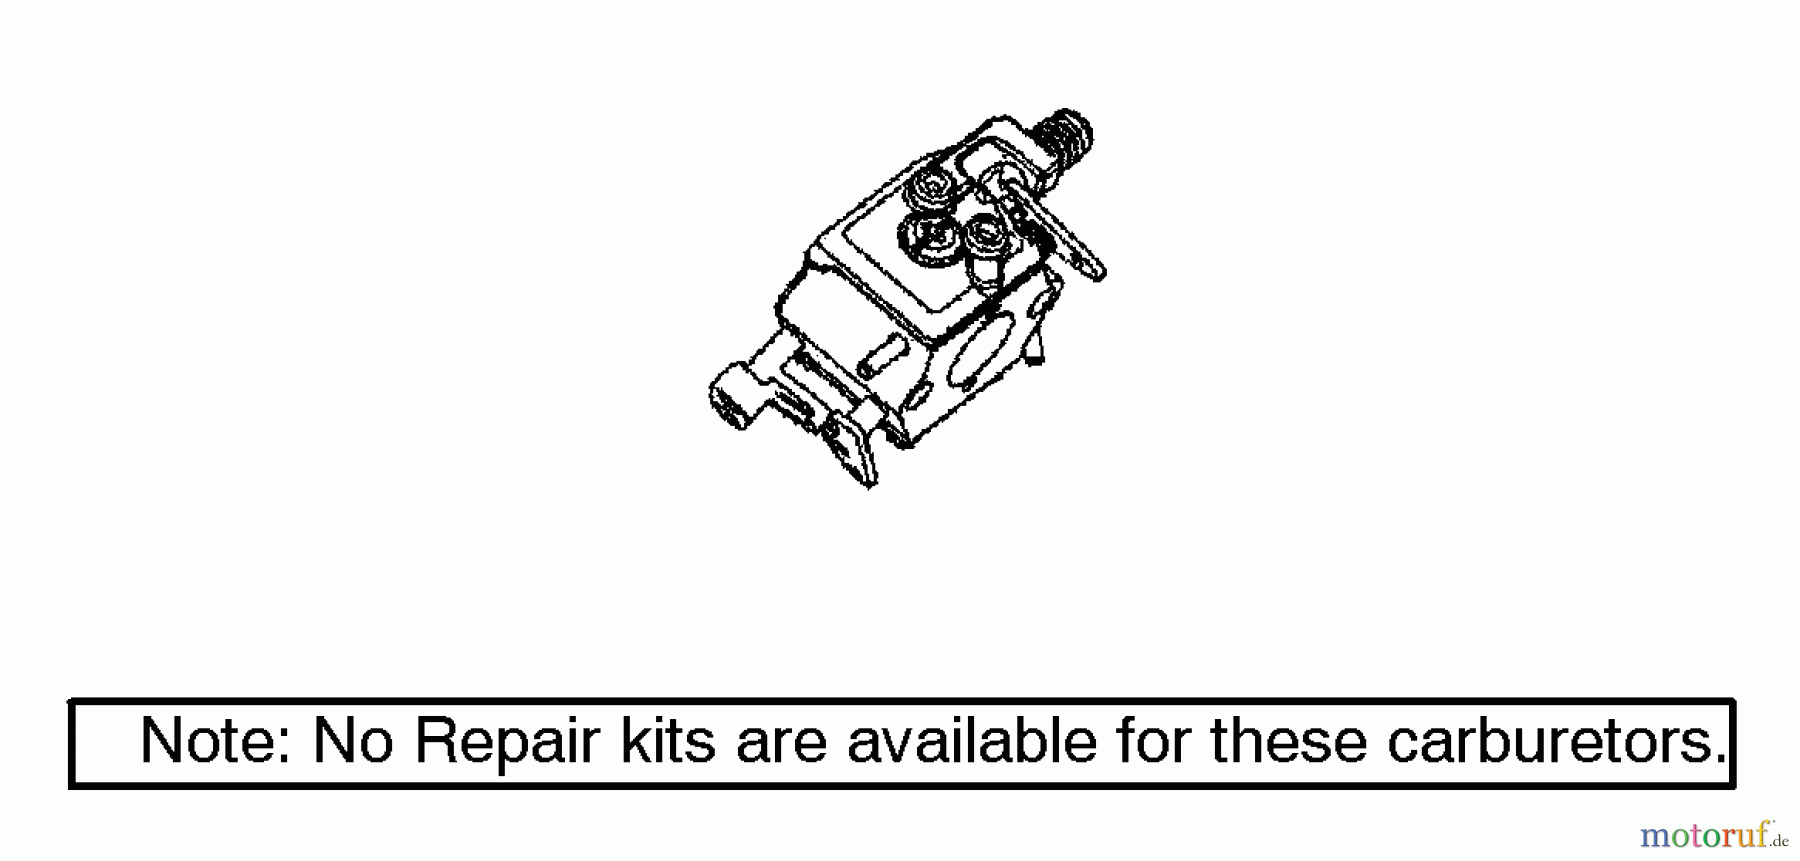  Poulan / Weed Eater Motorsägen 2050 (Type 5) - Poulan Pioneer Chainsaw Carburetor Assembly Kits 530071620/530071820/530071821